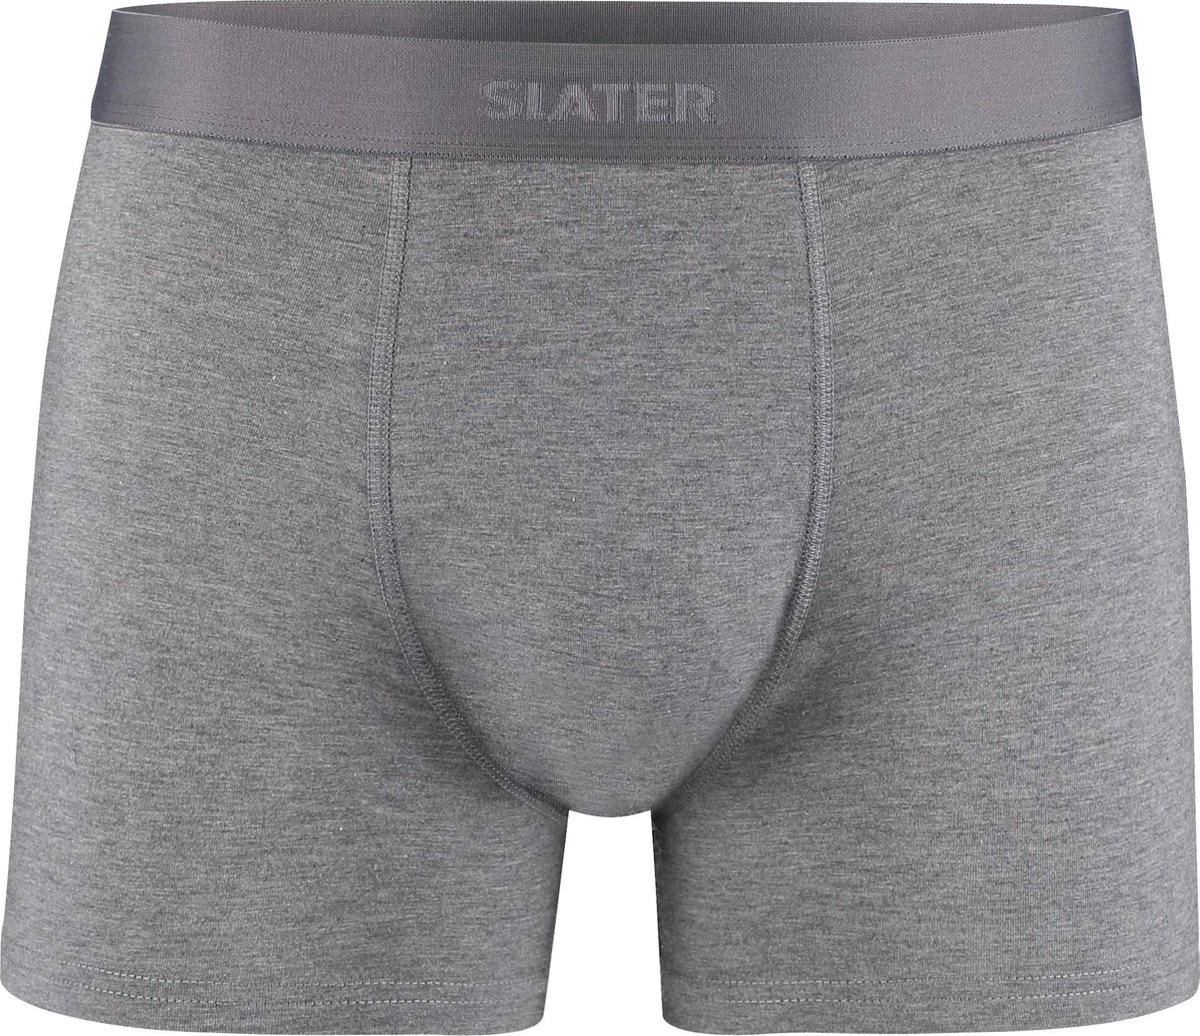 Slater 8830 - Bamboe Boxershort 2-pack grijs melange XL